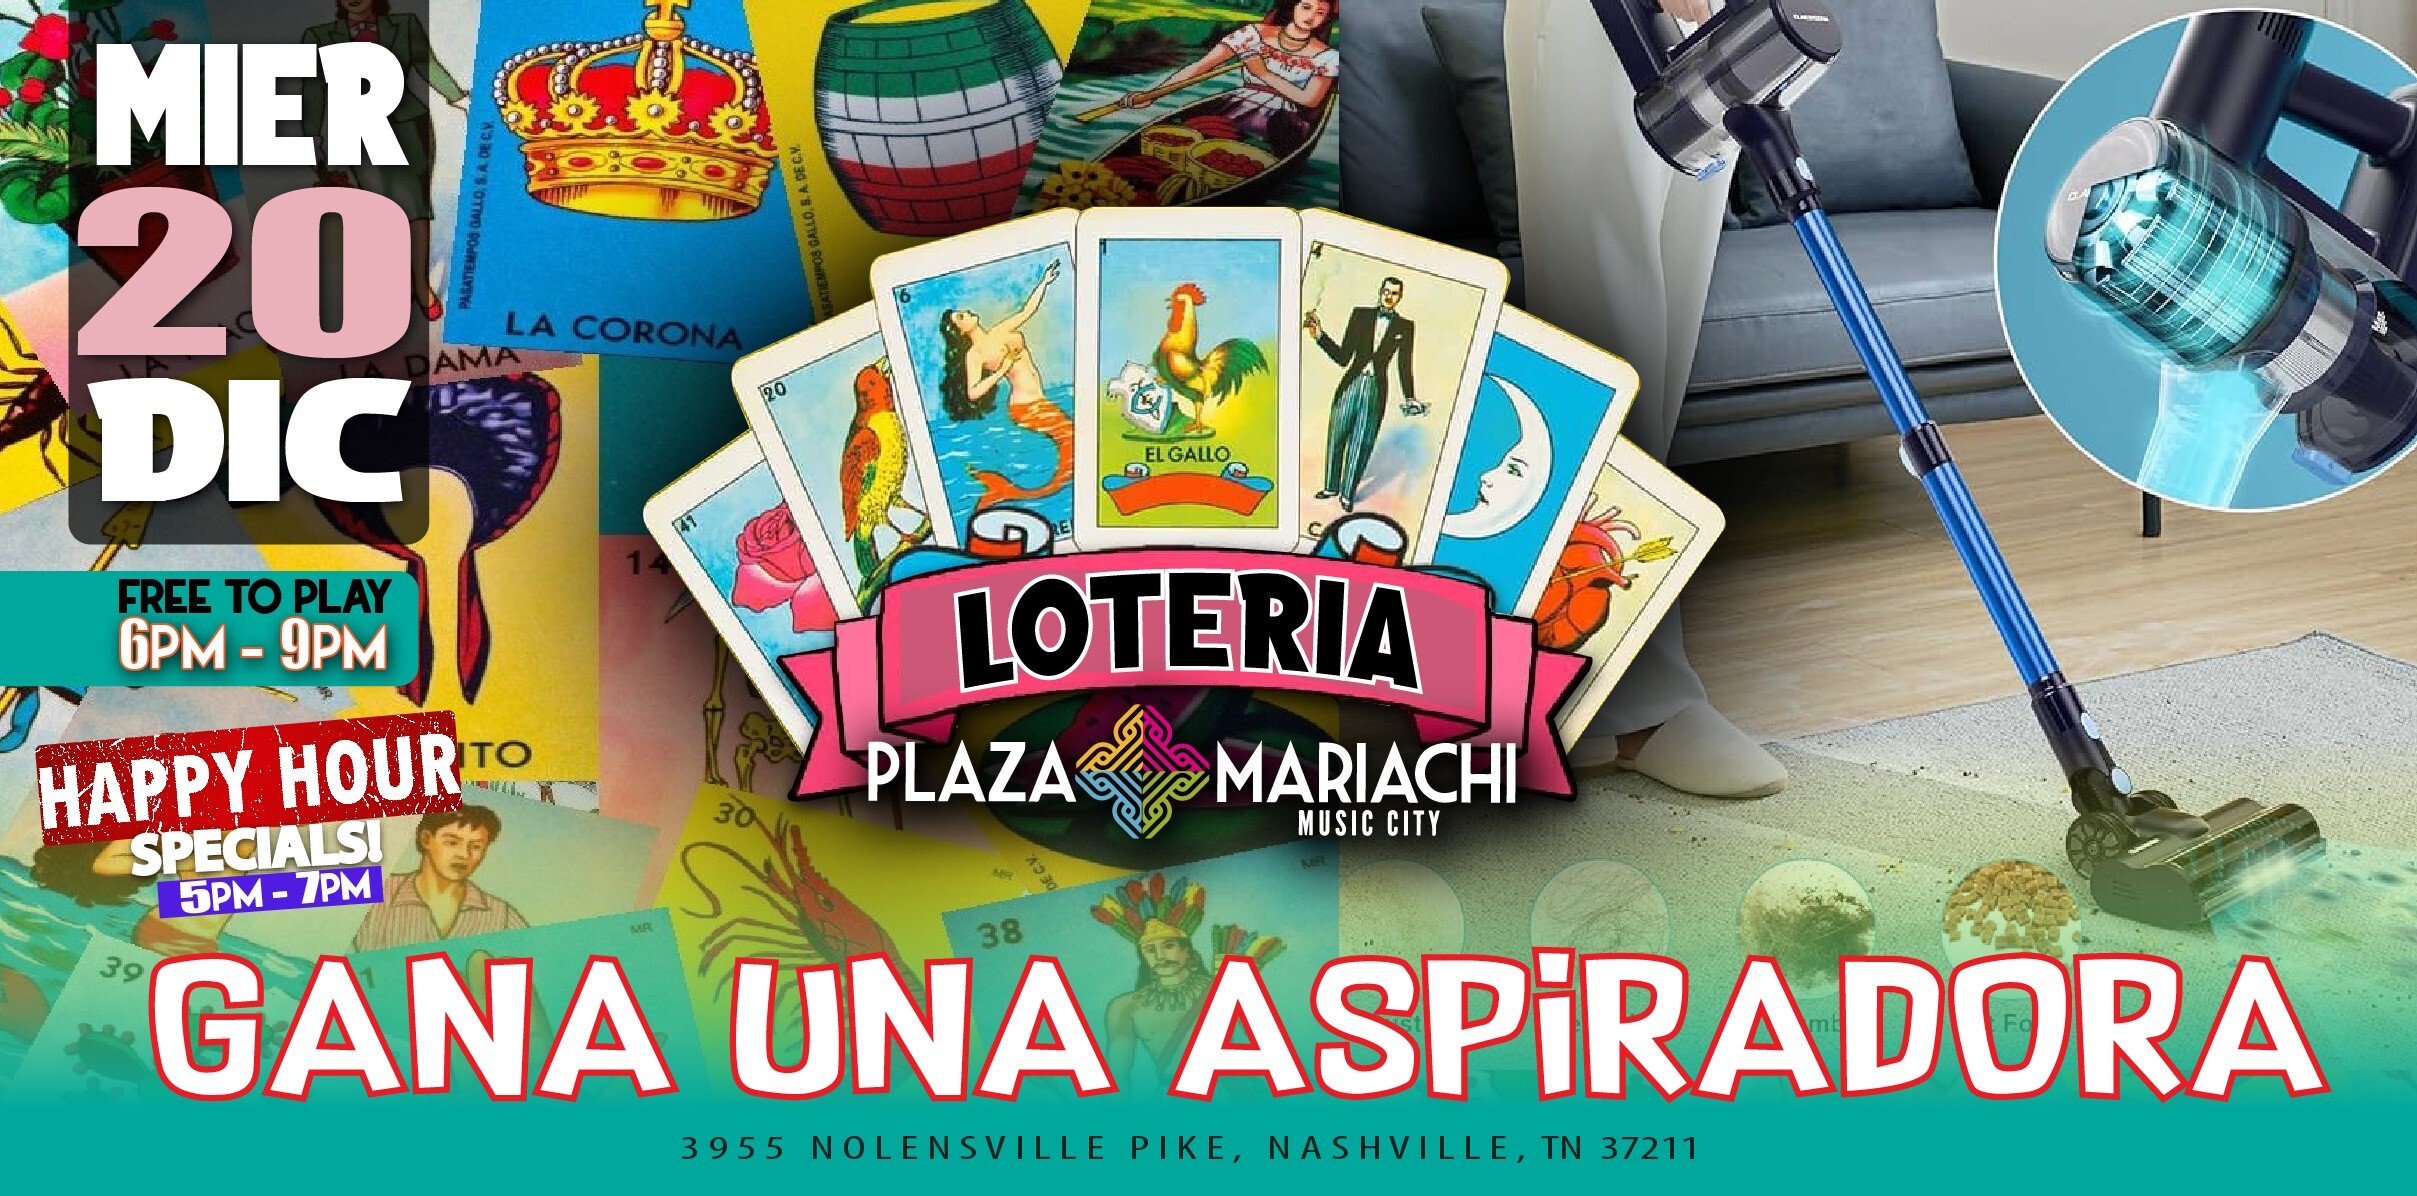 Loteria Night - Plaza Mariachi - Play Mexican Bingo!